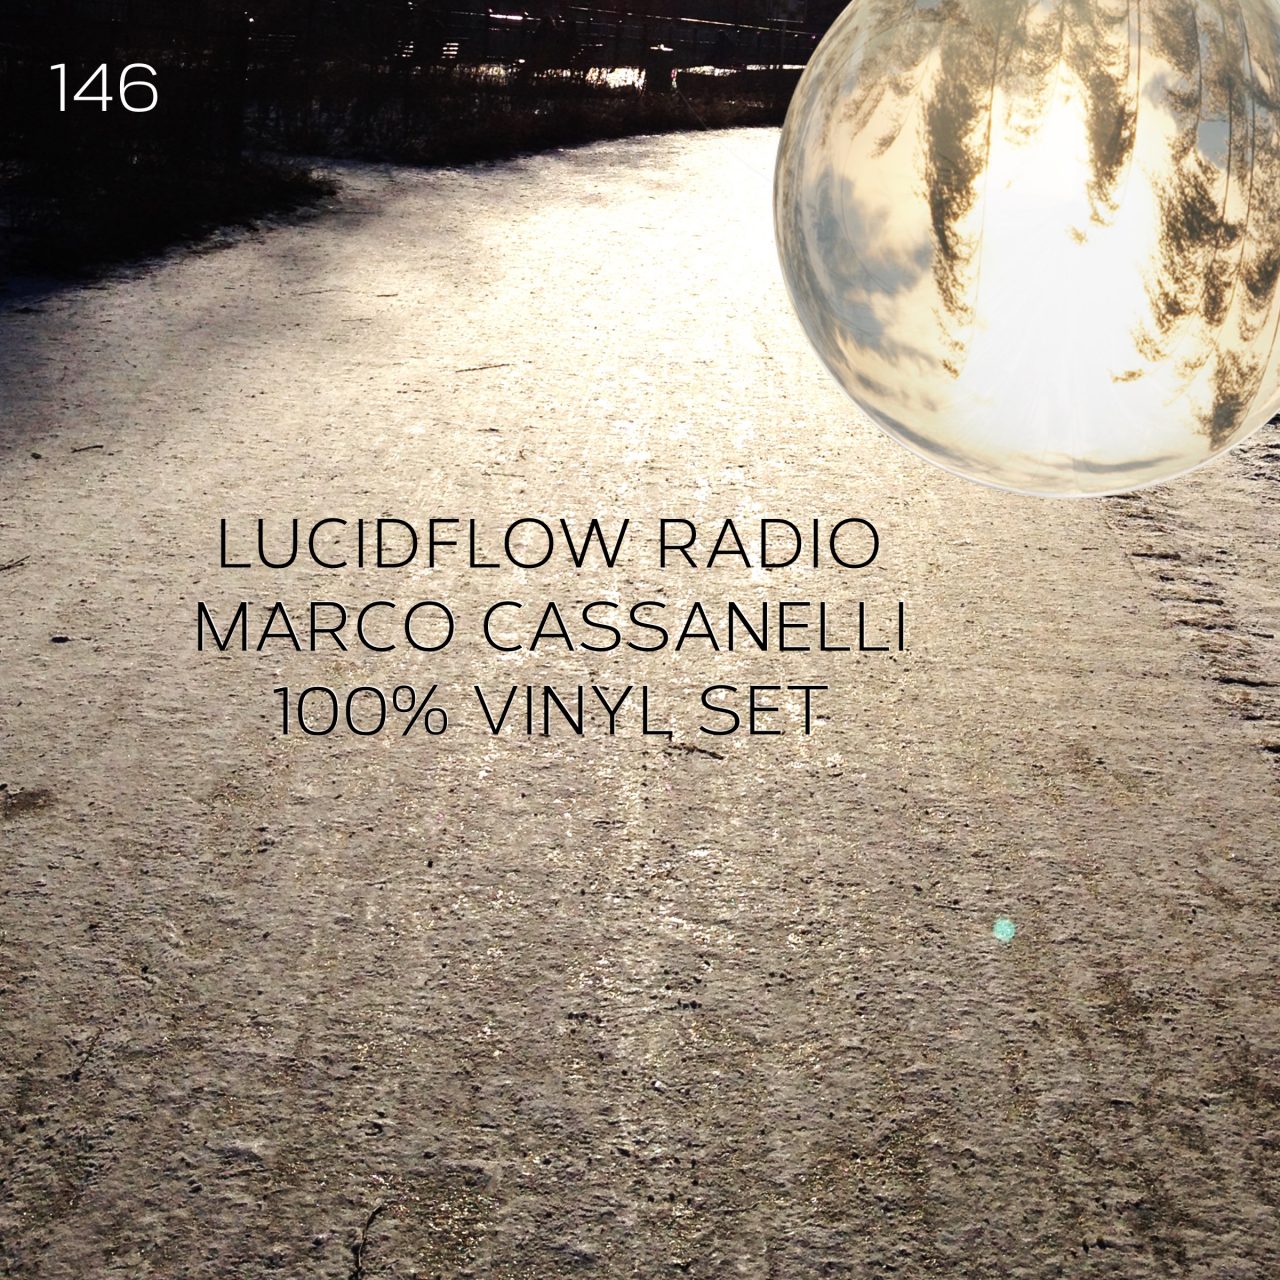 Lucidflow Radio 146: Marco Cassanelli